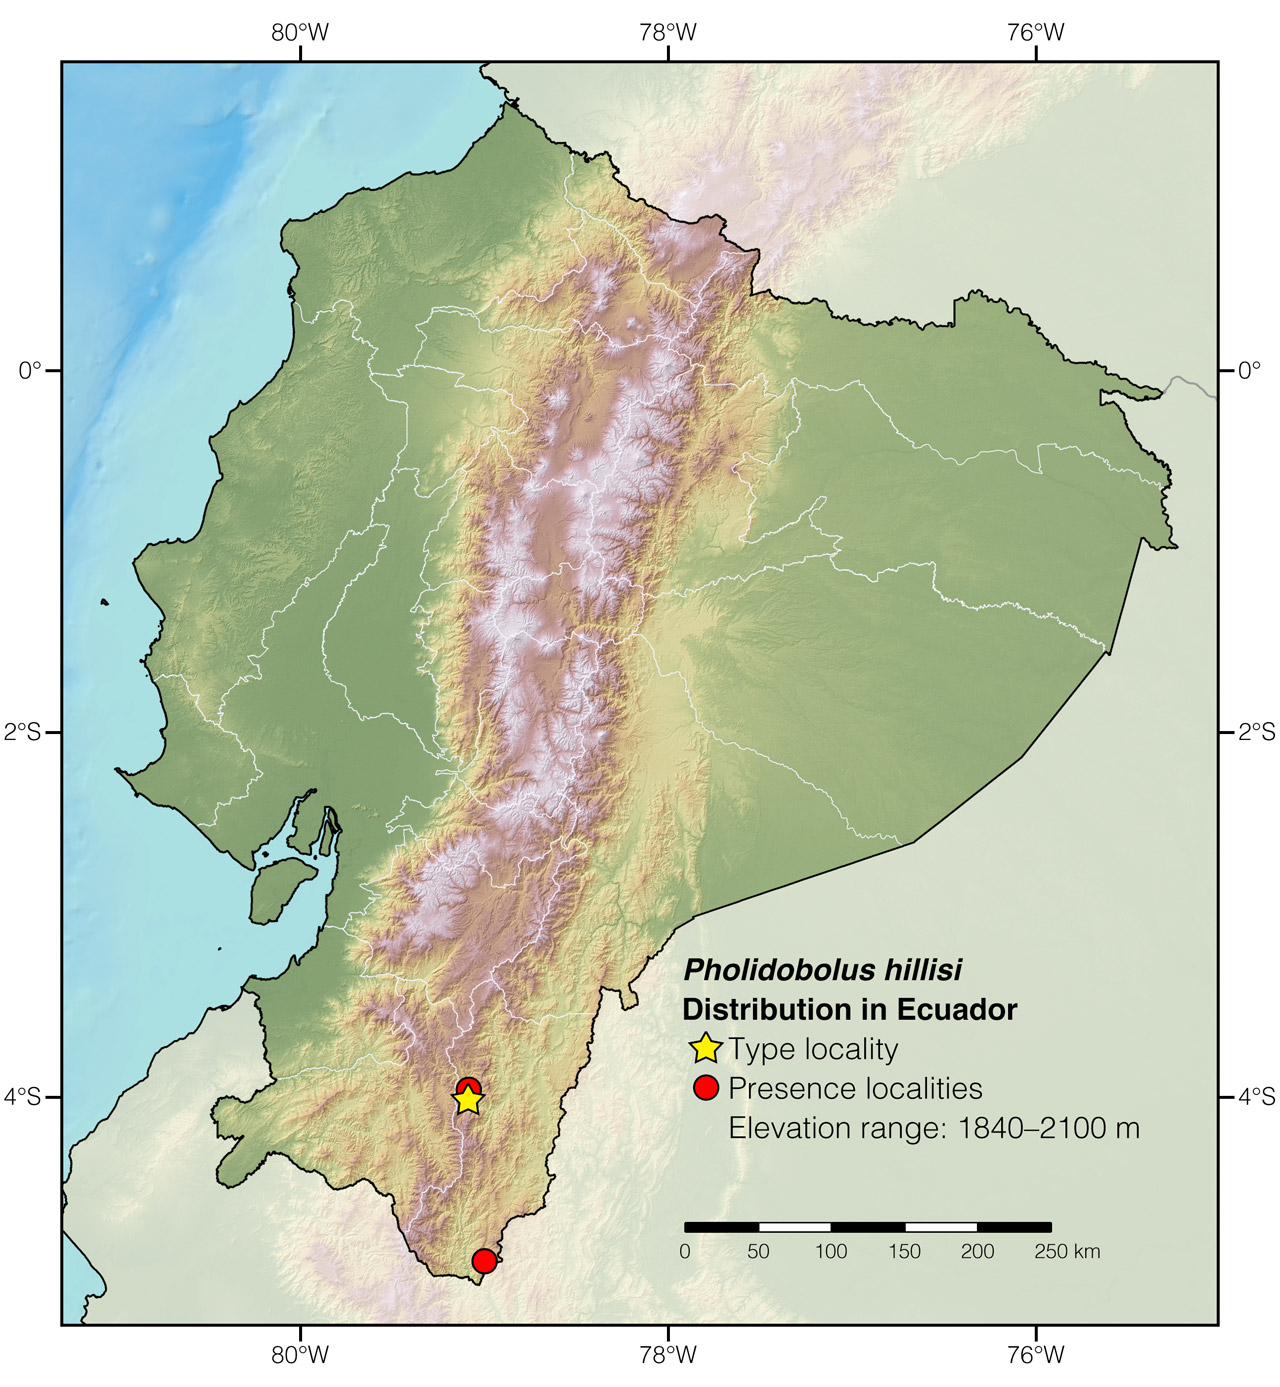 Distribution of Pholidobolus hillisi in Ecuador